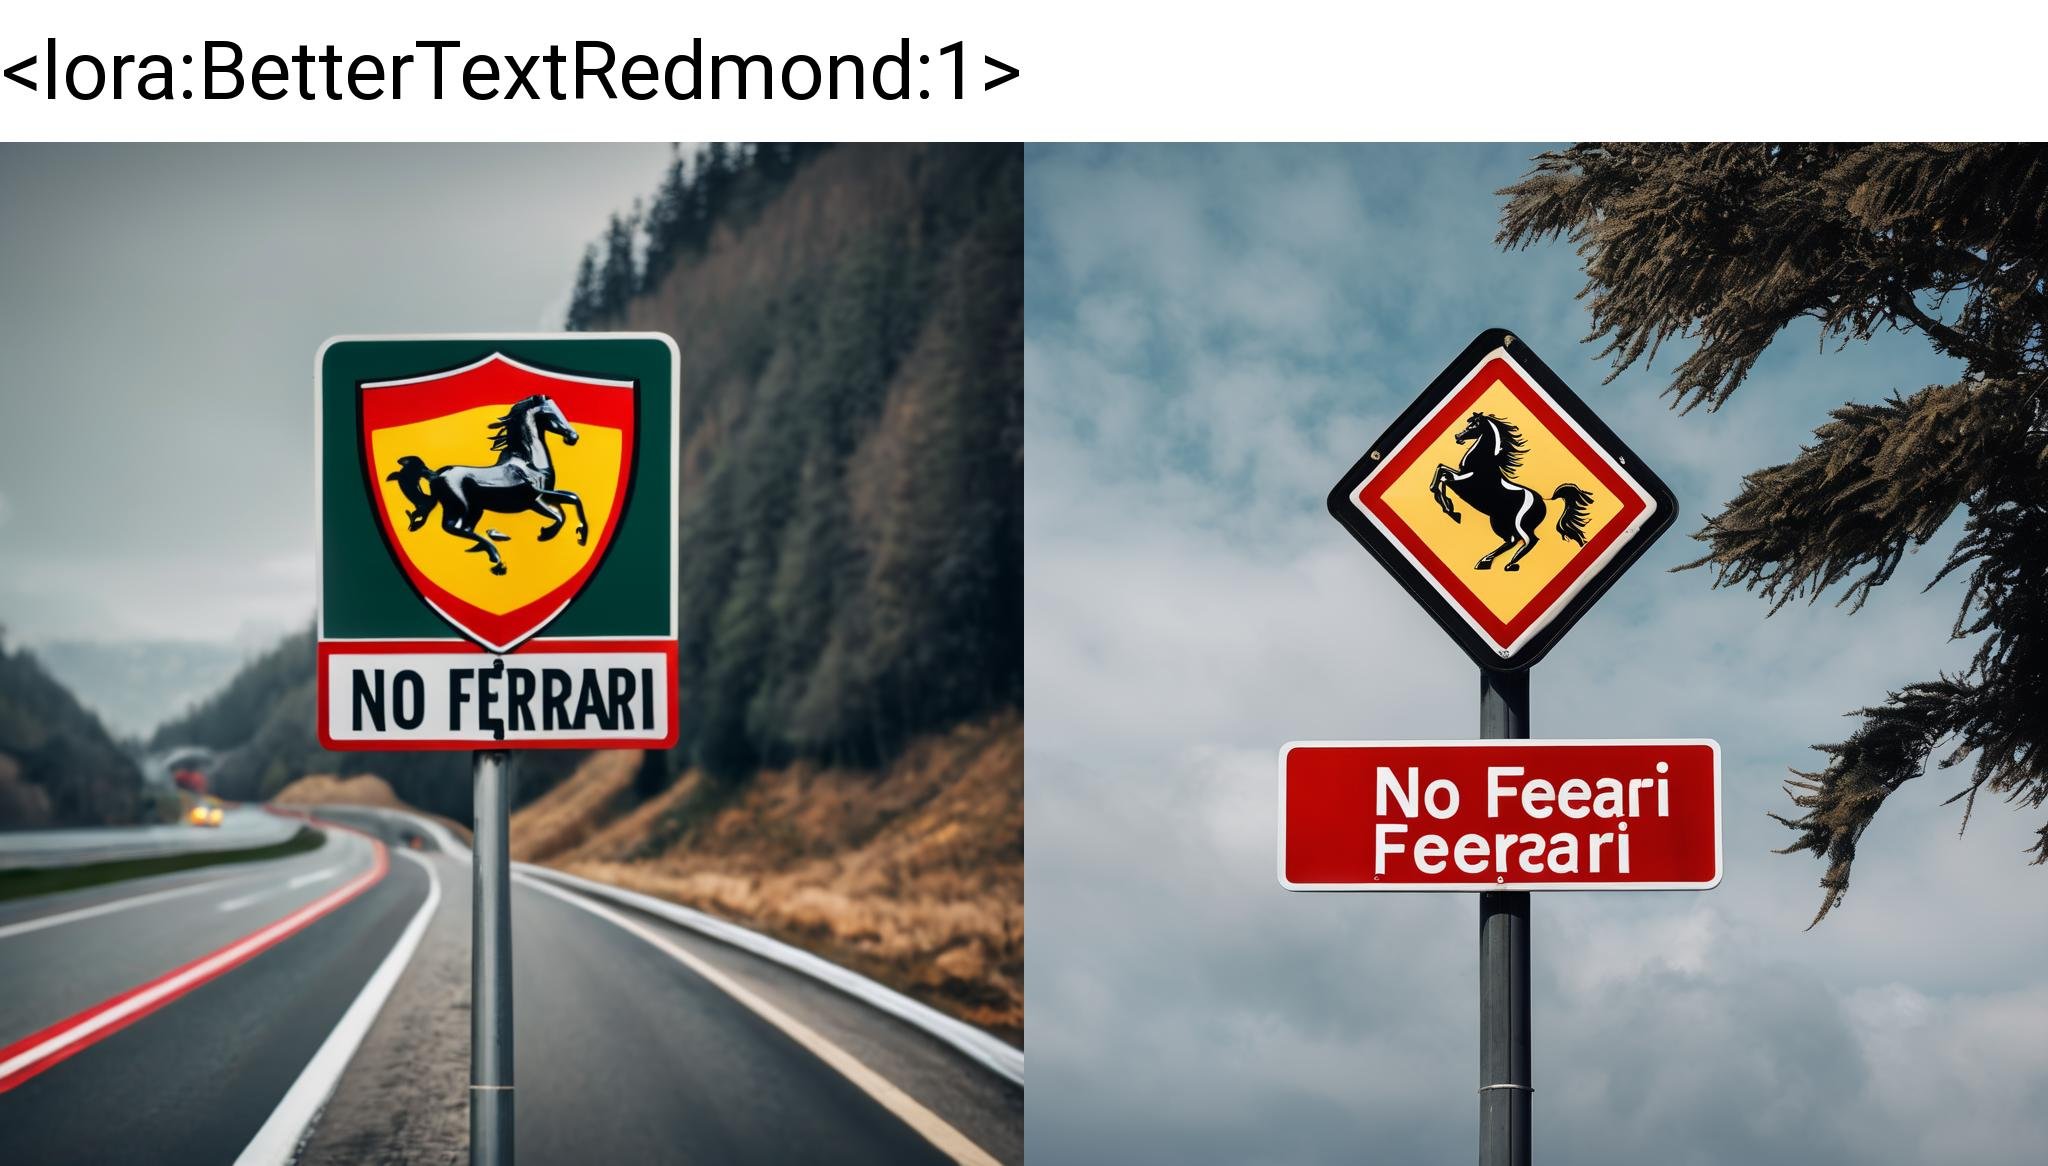 A road sign with "NO FERRARI" on it, "NO FERRARI", <lora:BetterTextRedmond:1>